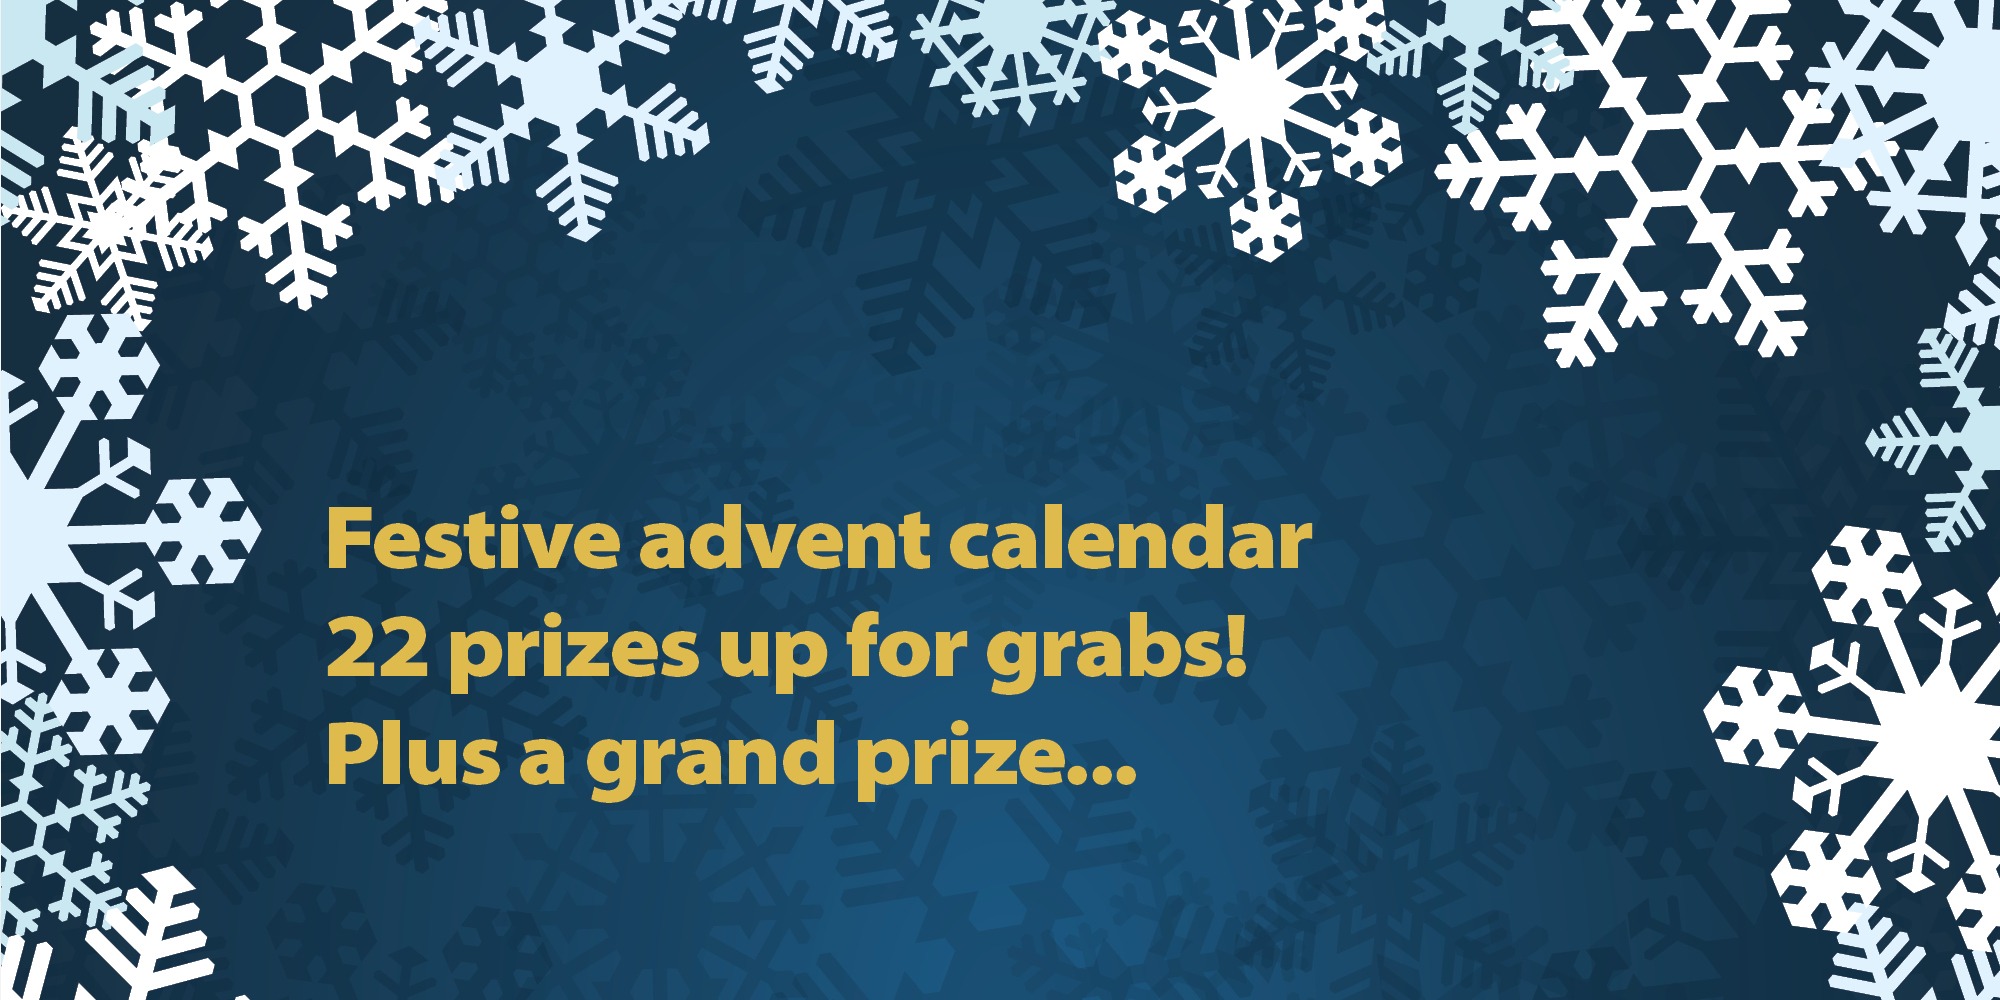 Festive advent calendar 22 prizes up for grabs! Plus a grand prize...